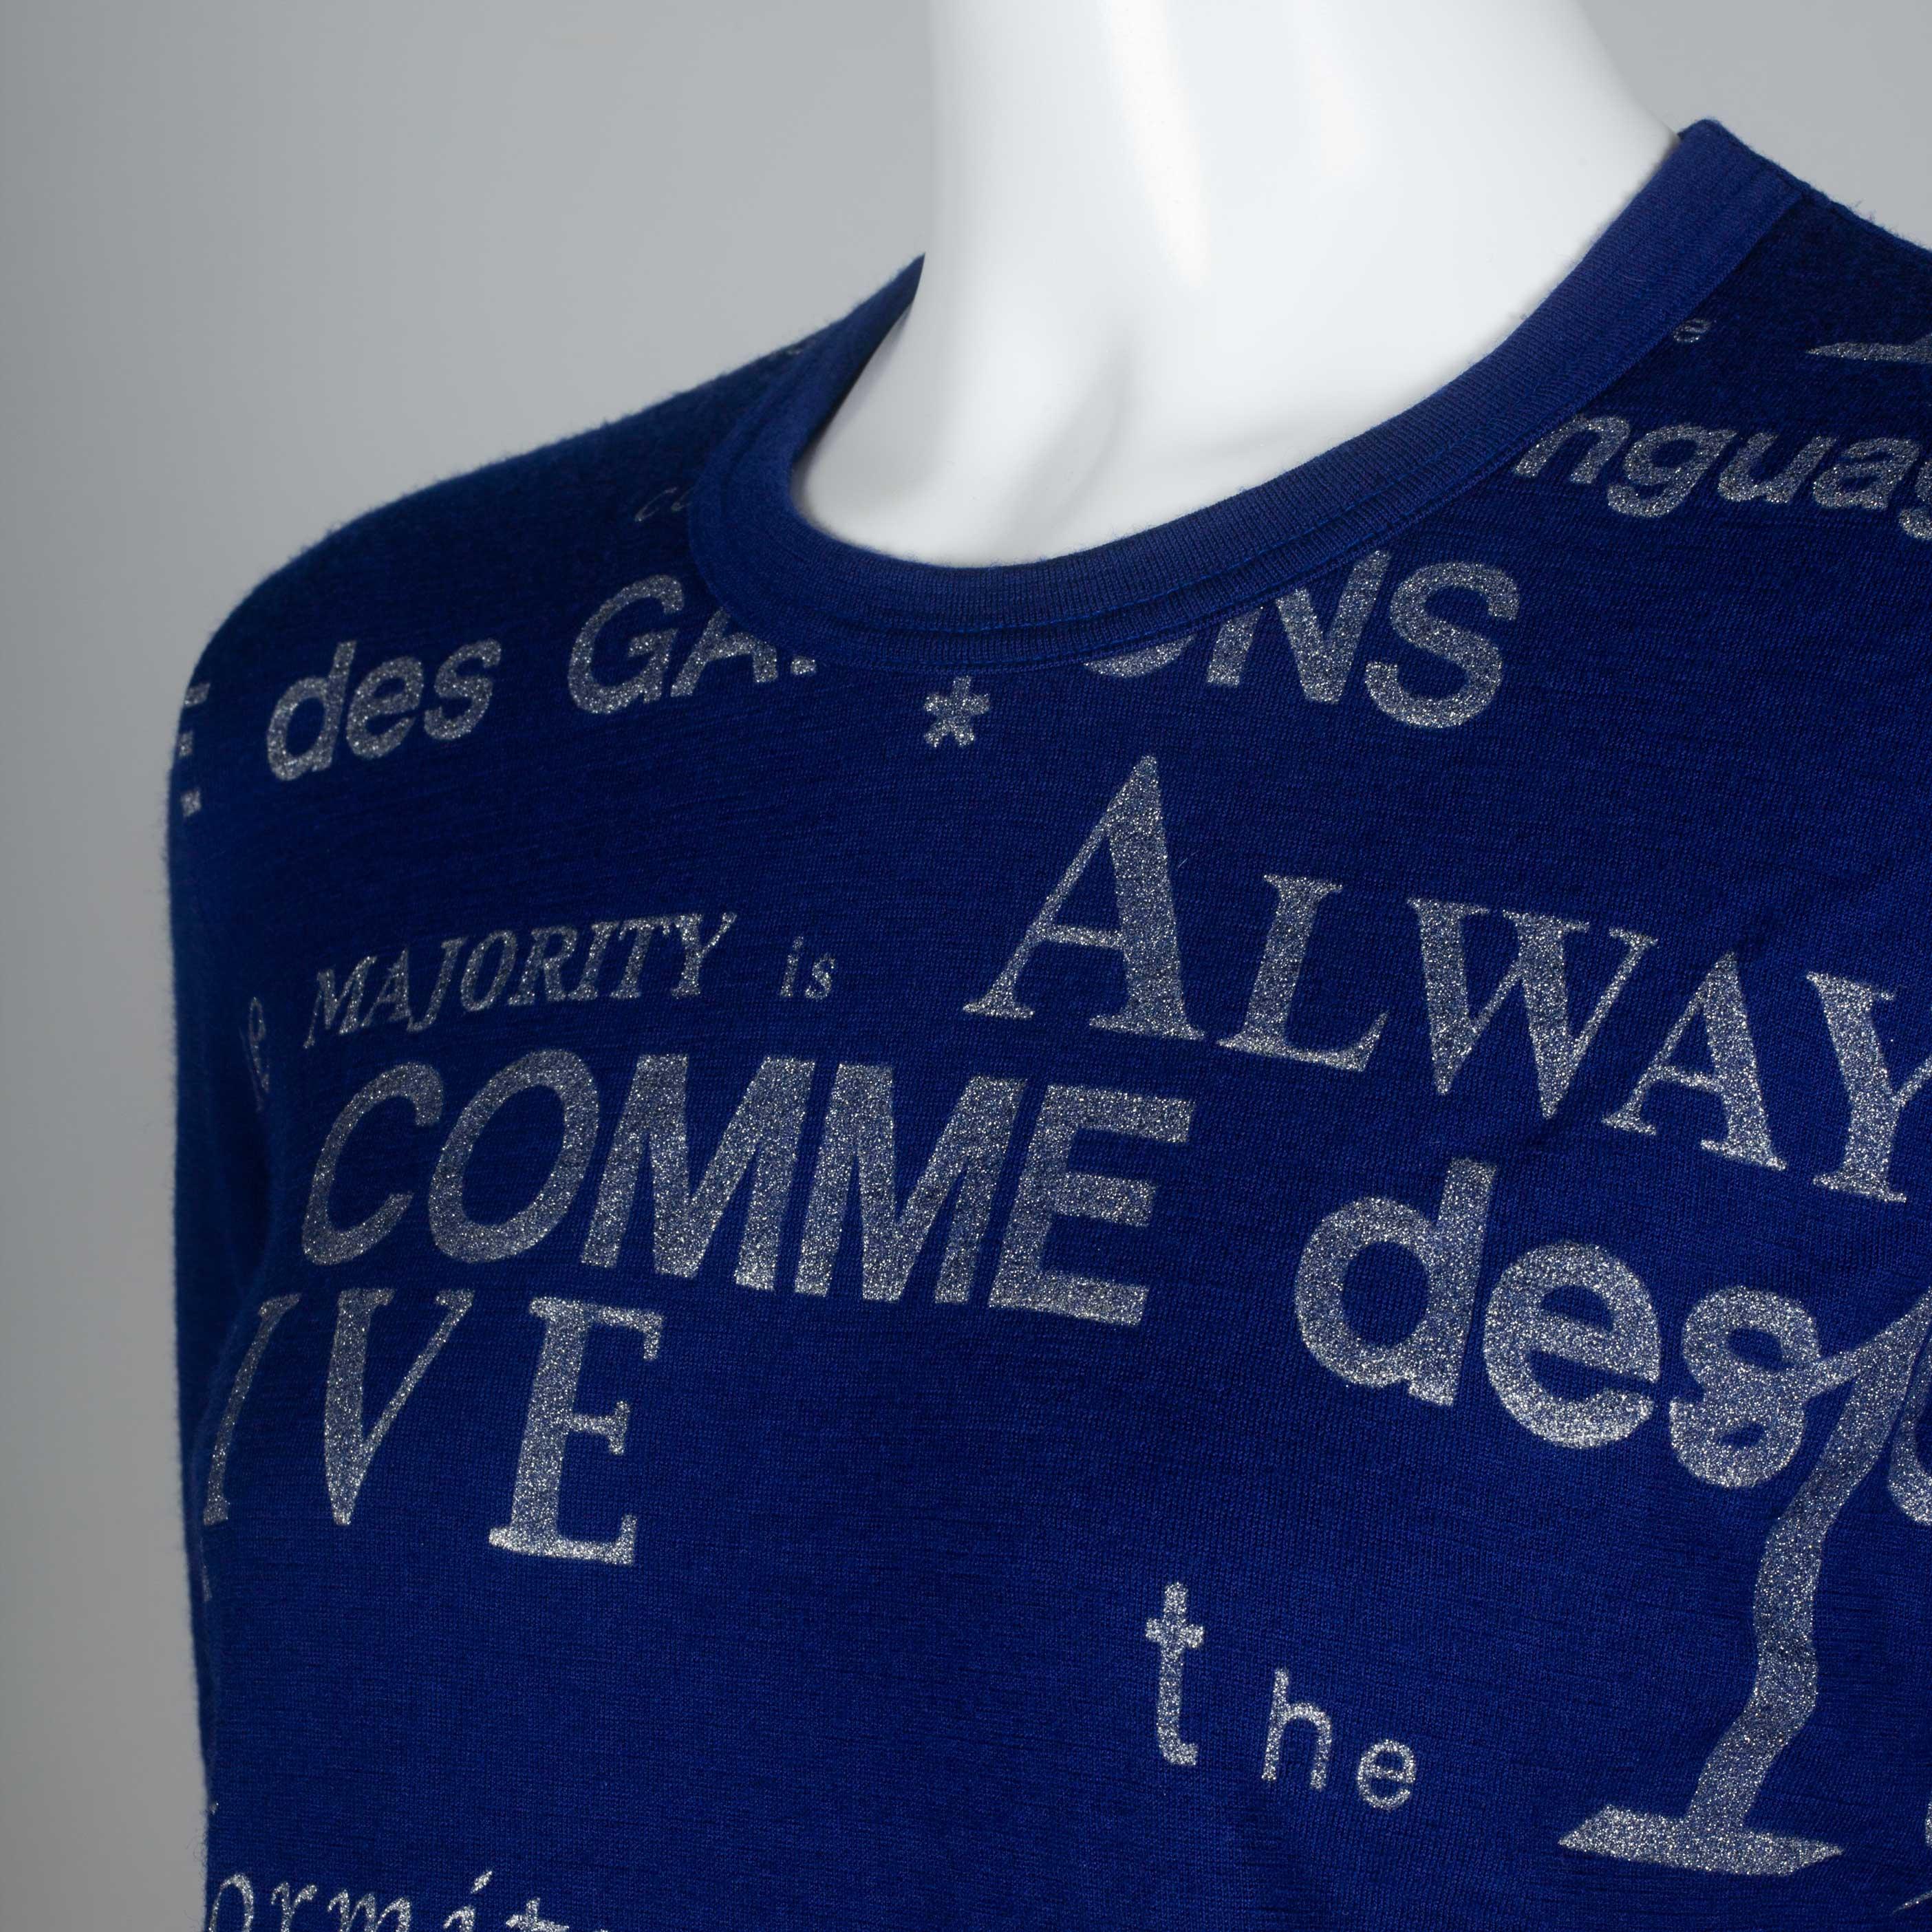 Women's or Men's Comme des Garçons Blue Long Sleeve Shirt with Printed Words, 2003